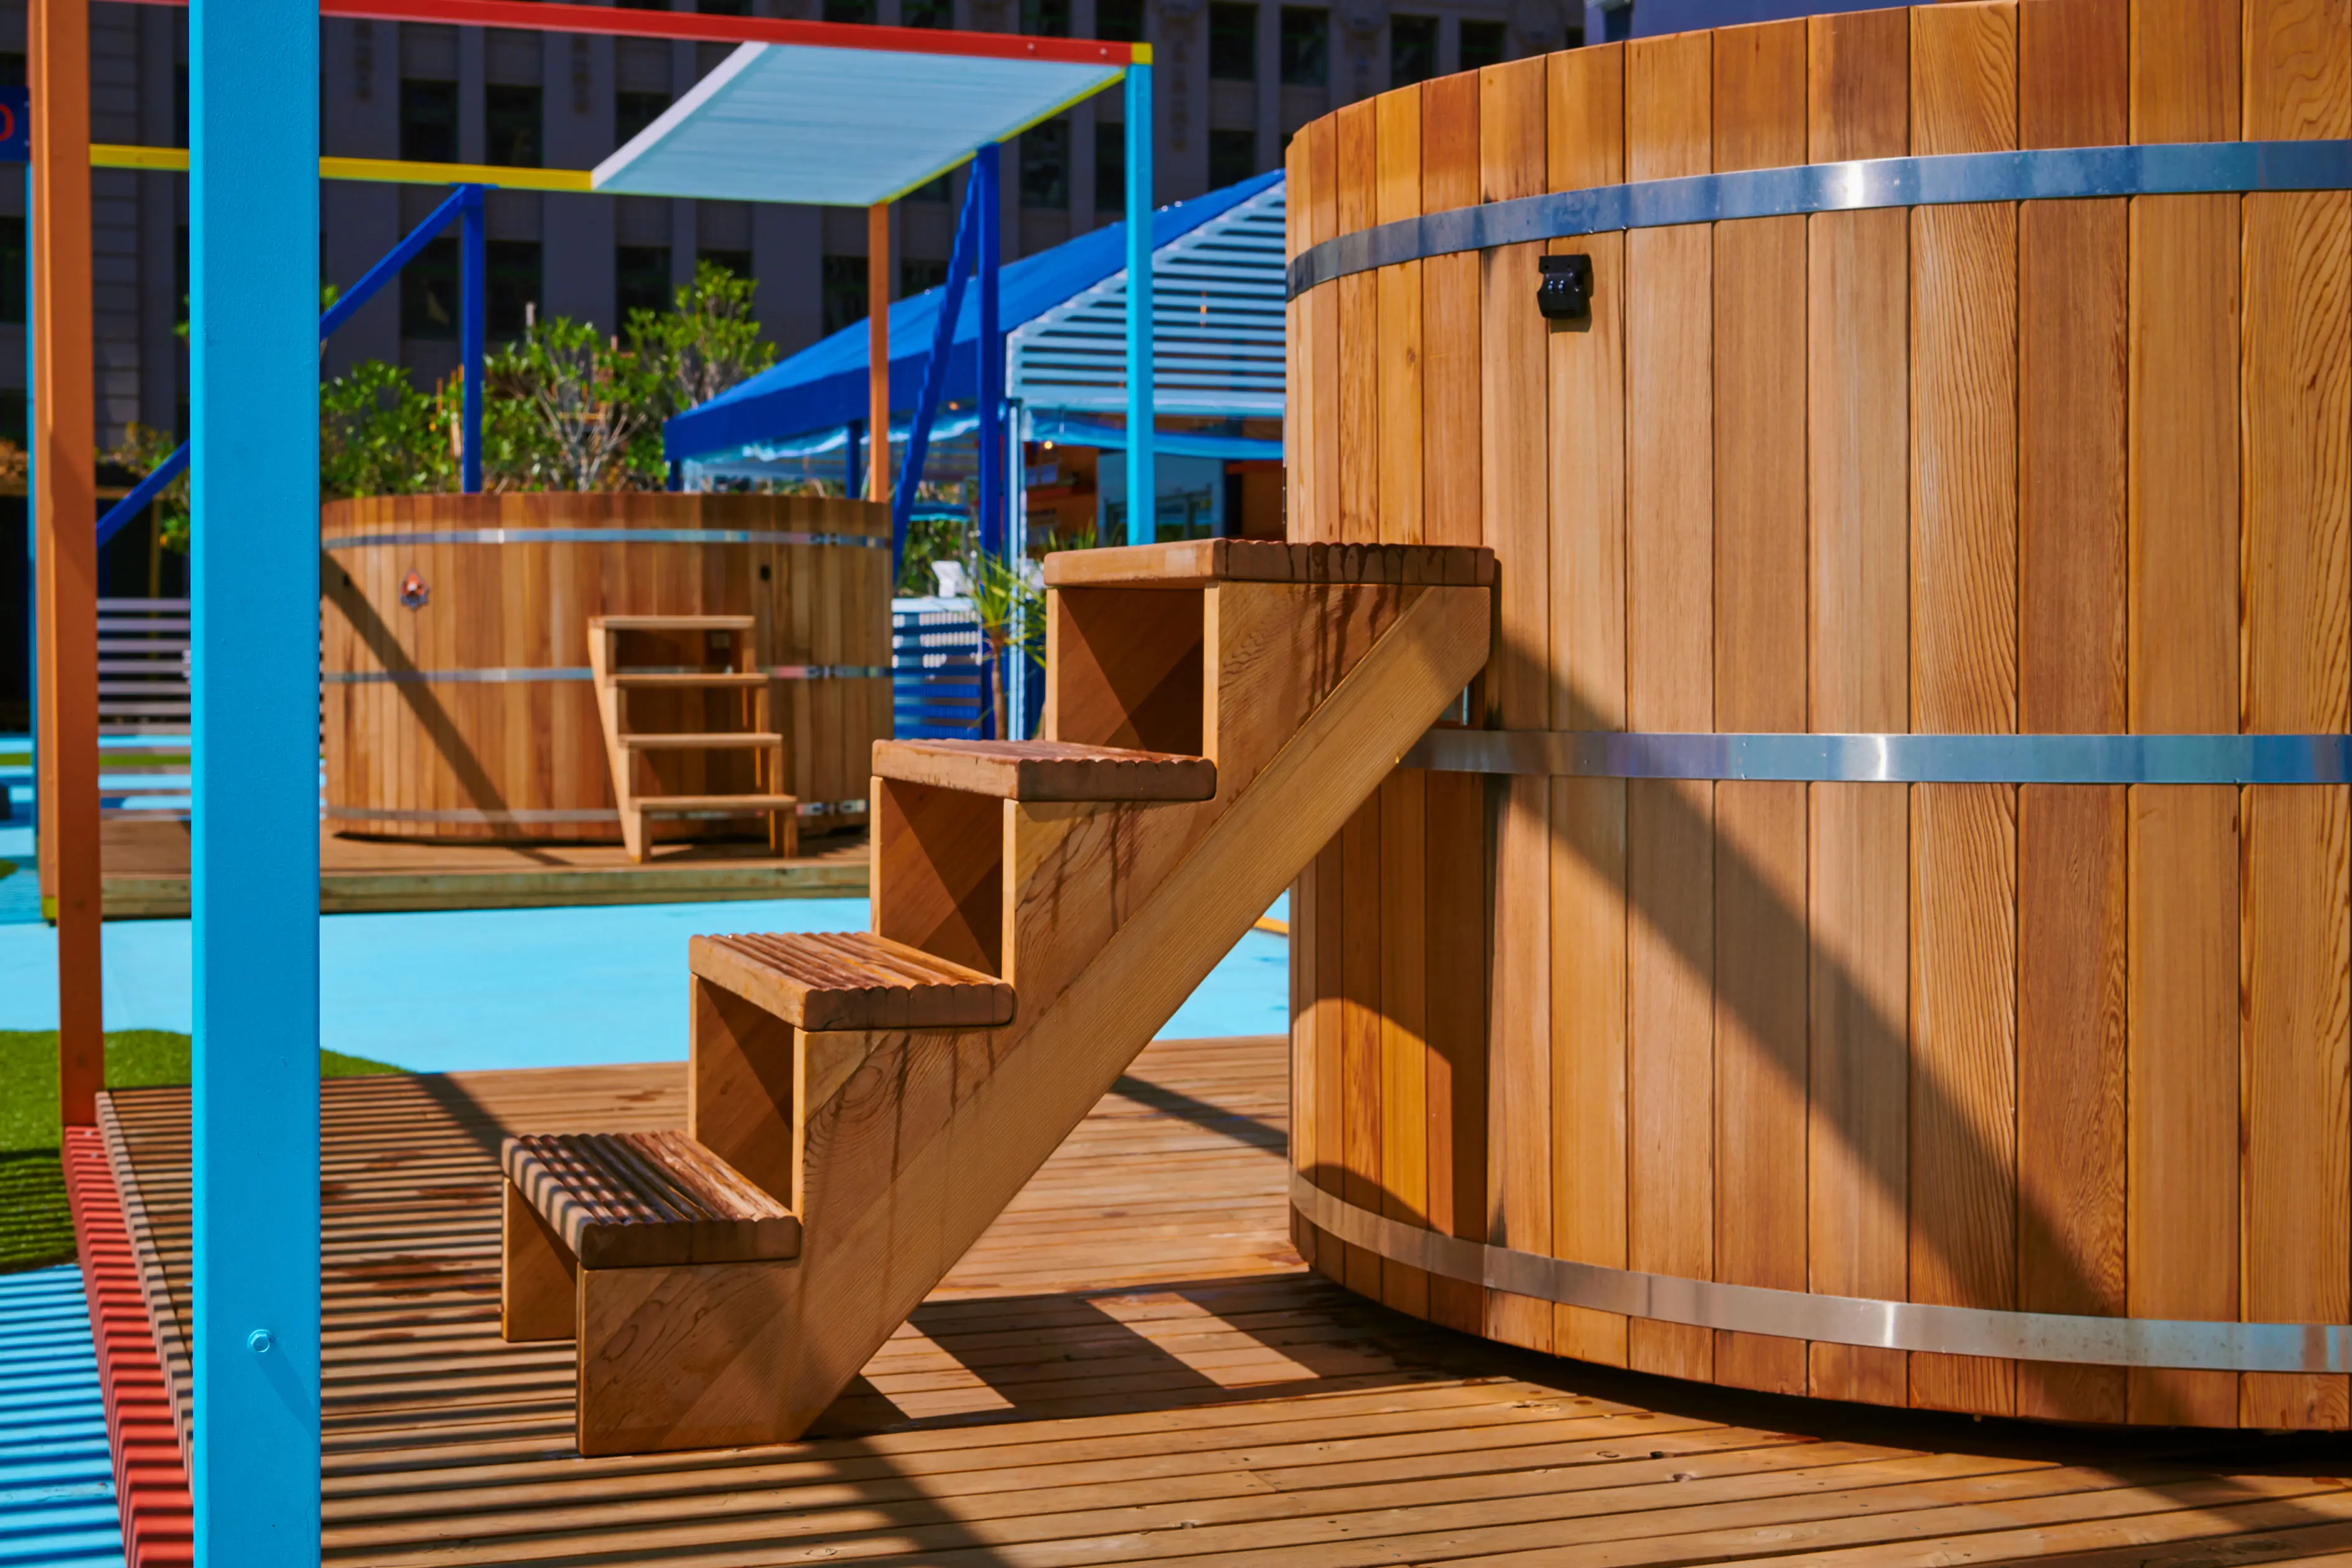 Reunion Island Pool Club - hospitality interior design, build and fitout, production - Melbourne, Australia